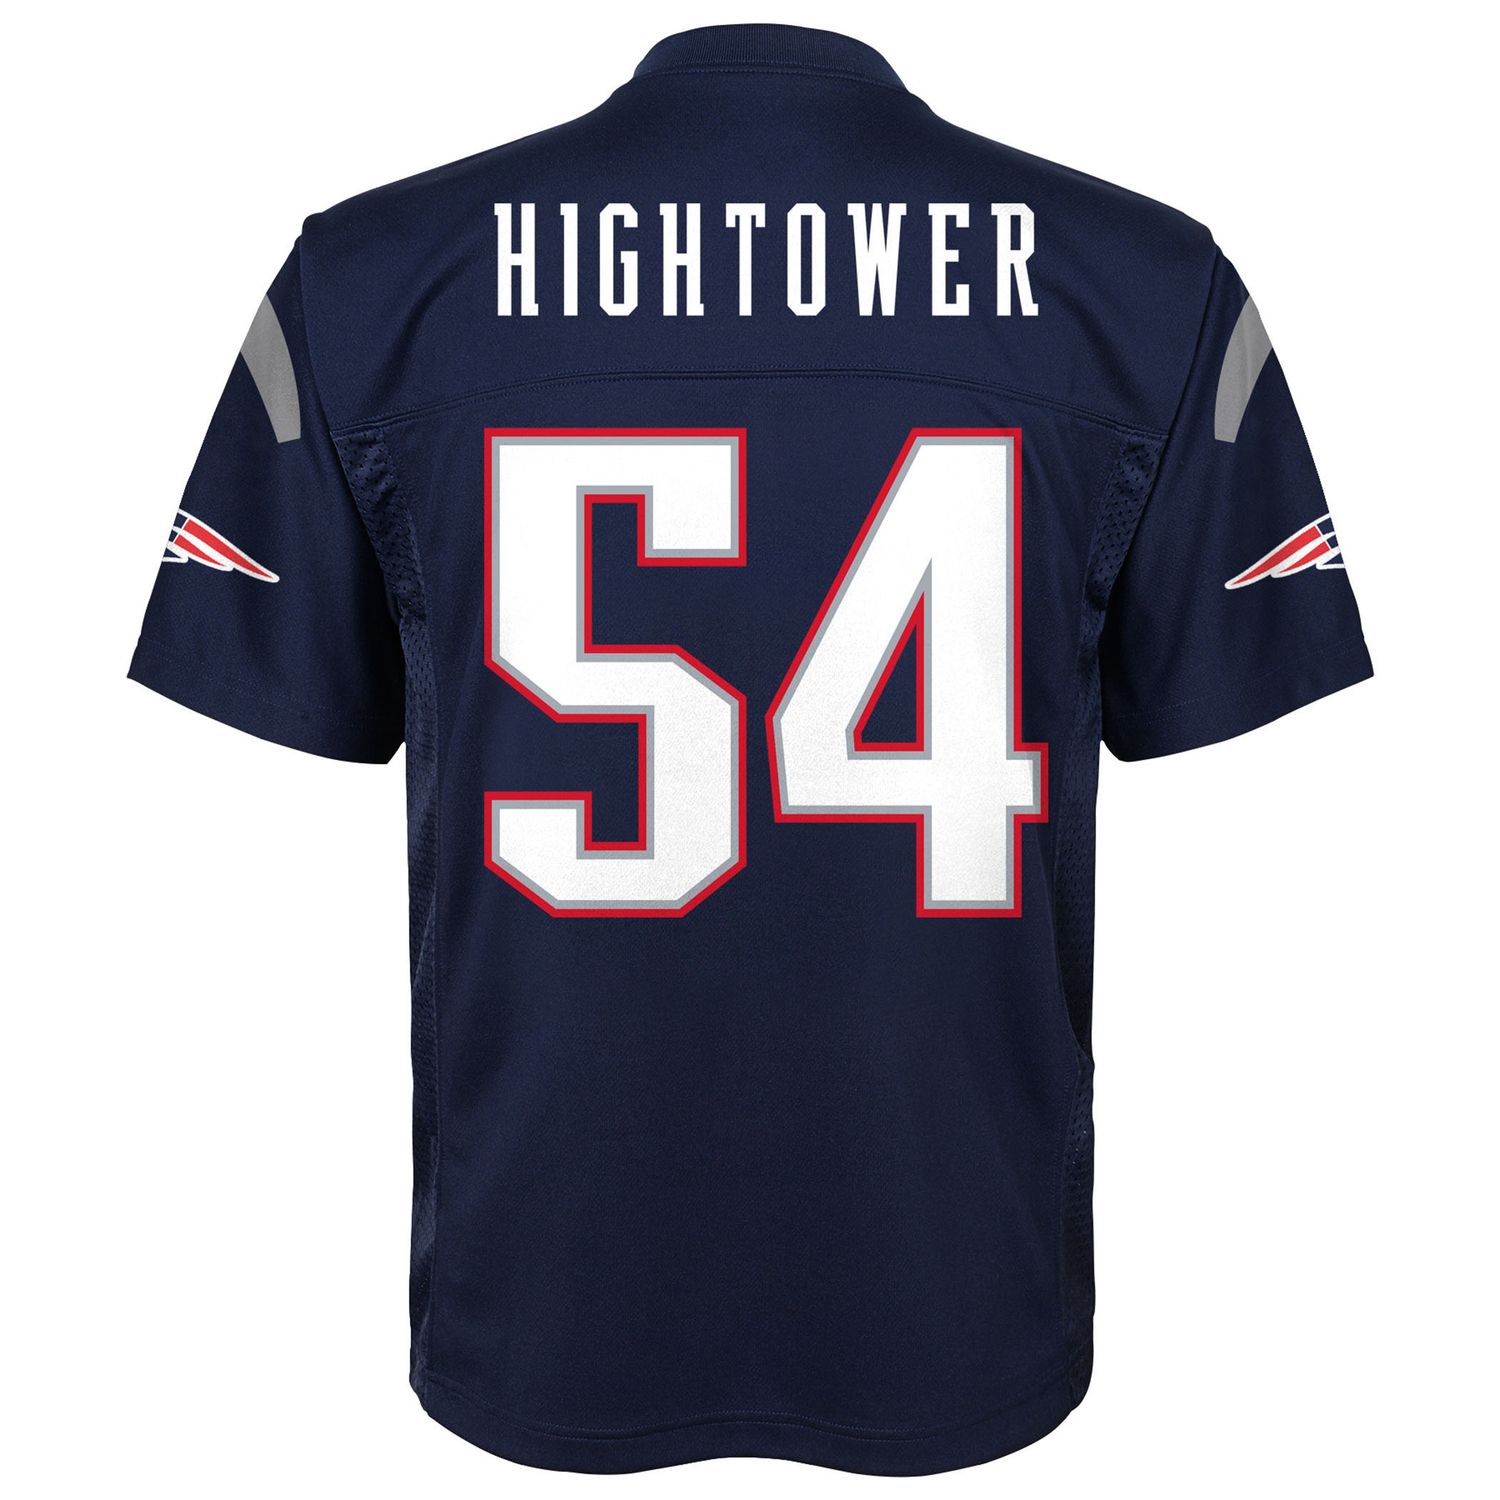 hightower patriots jersey